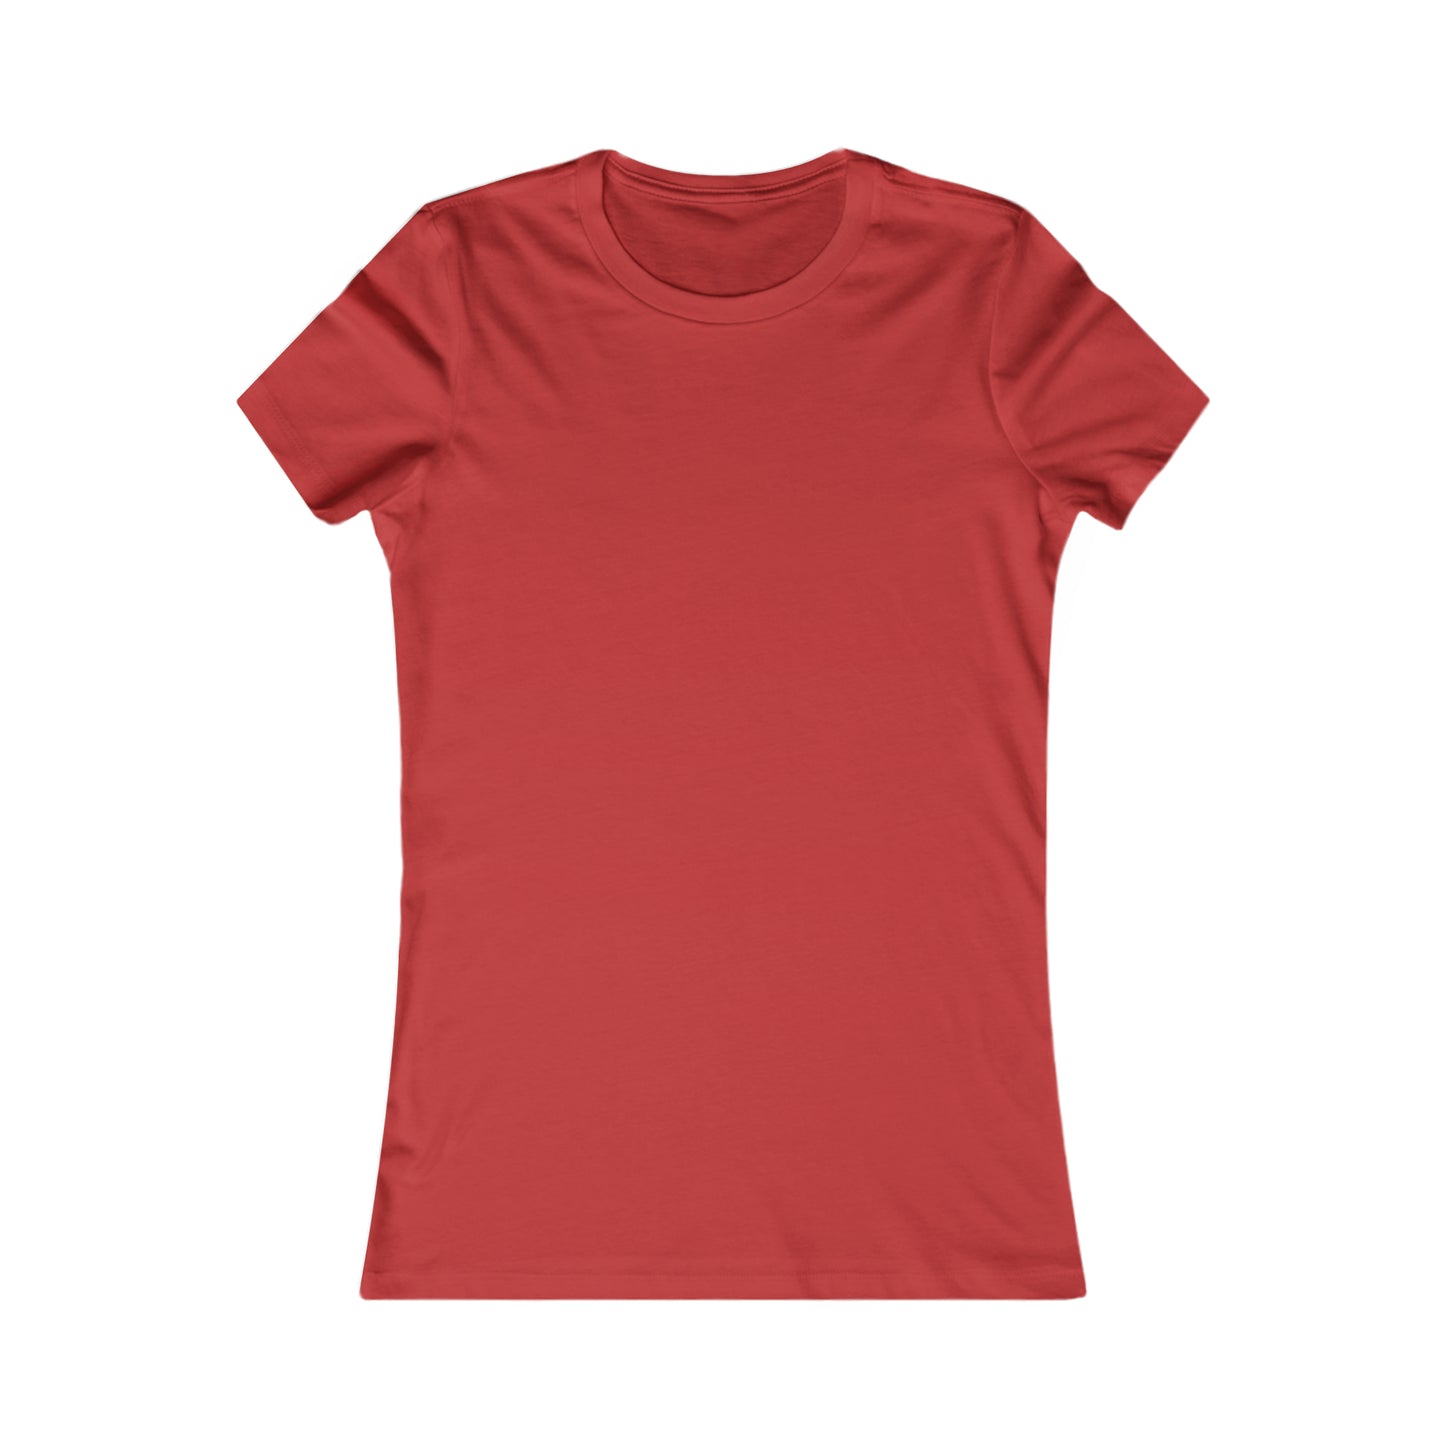 Red Women's Favorite T Shirt